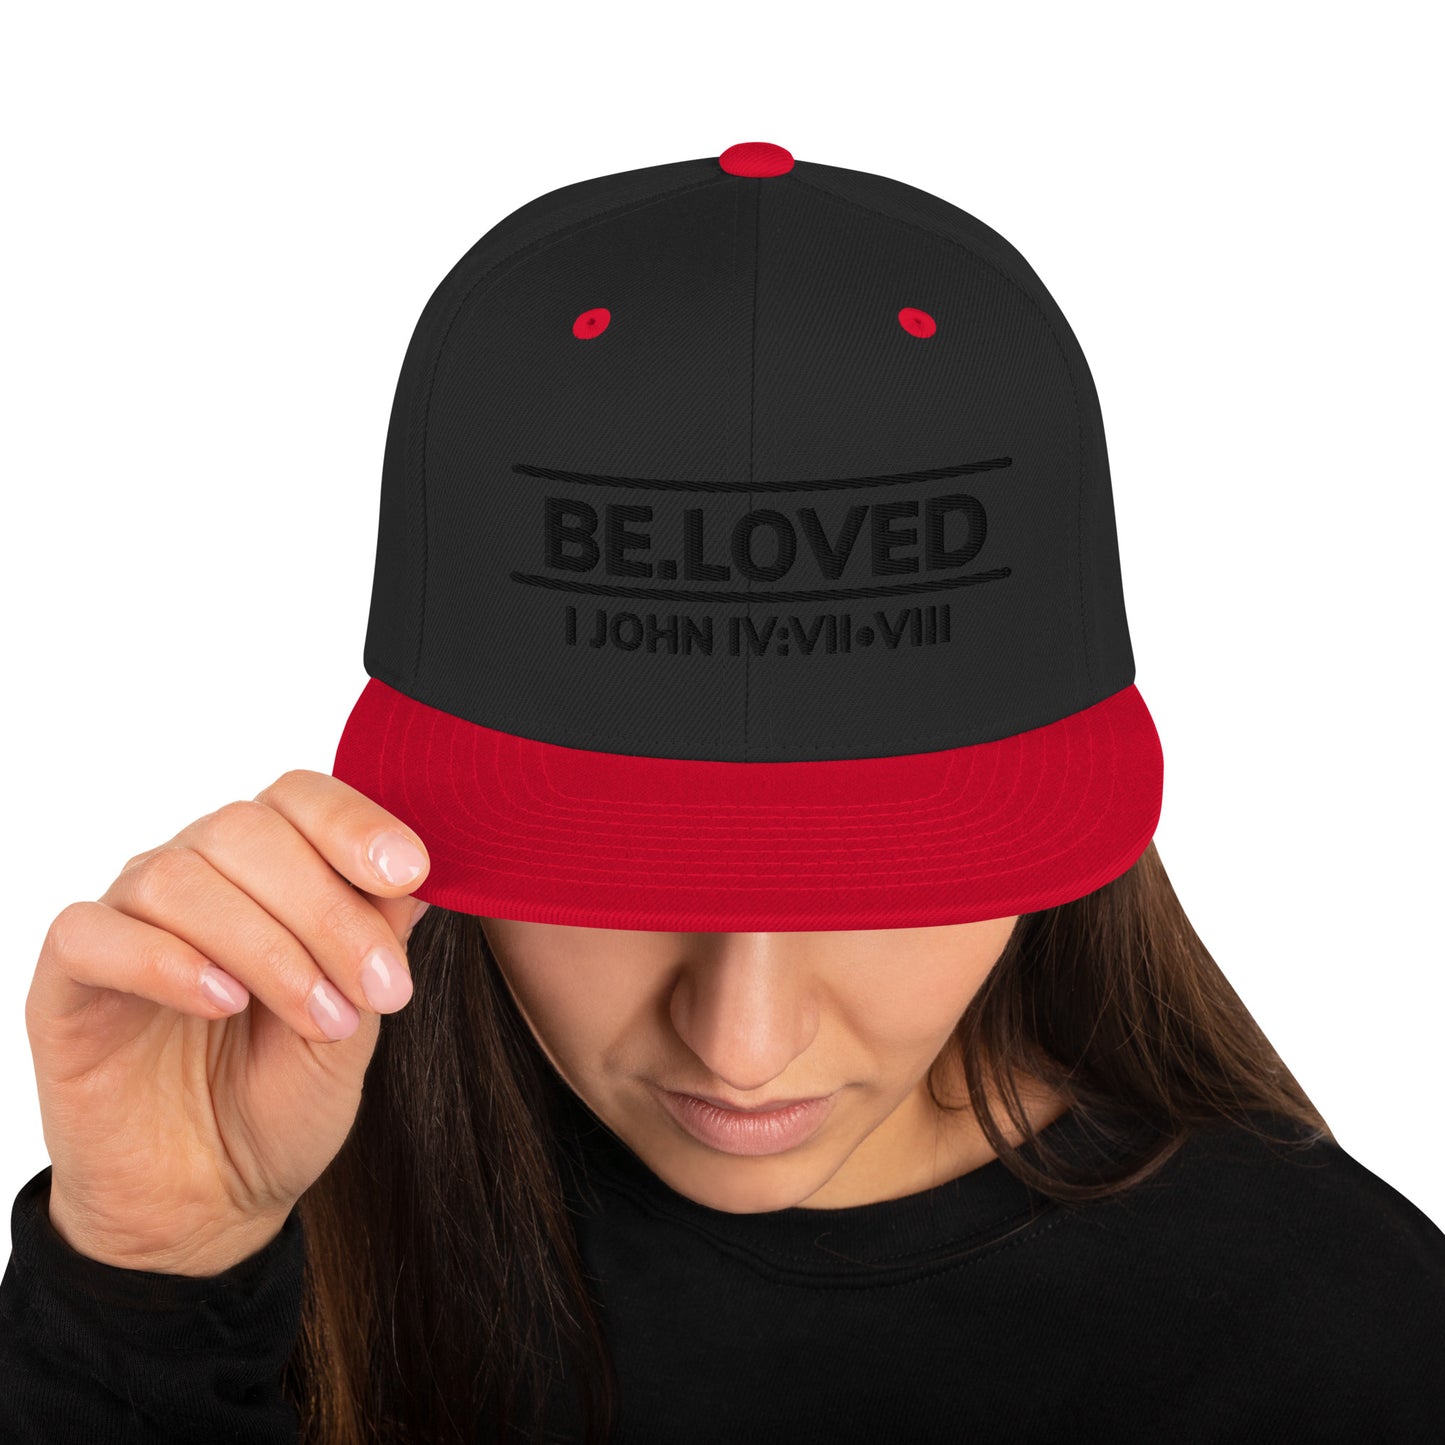 BE.LOVED Snapback Hat